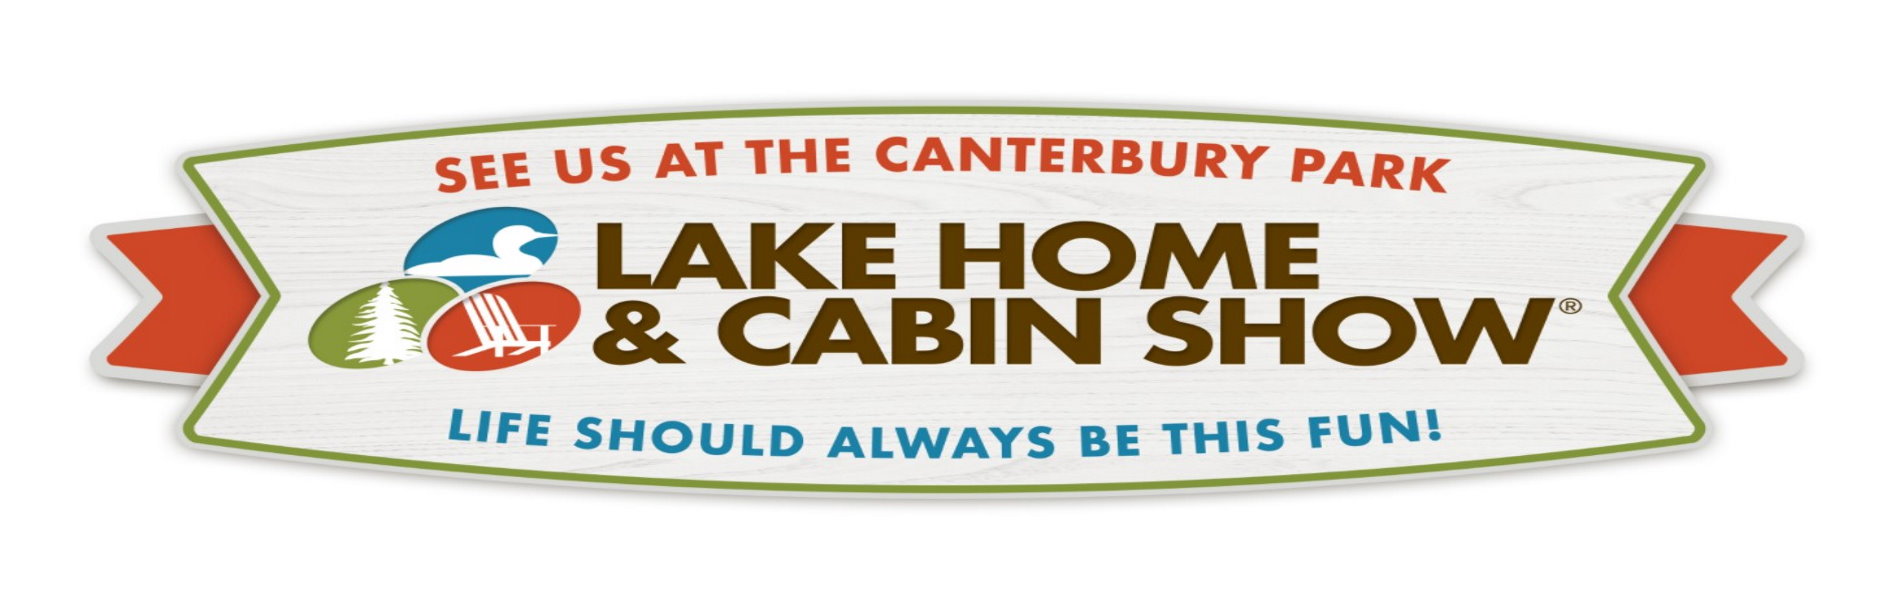 ugo® Will Be At The Lake Home and Cabin Show At Canterbury Park!